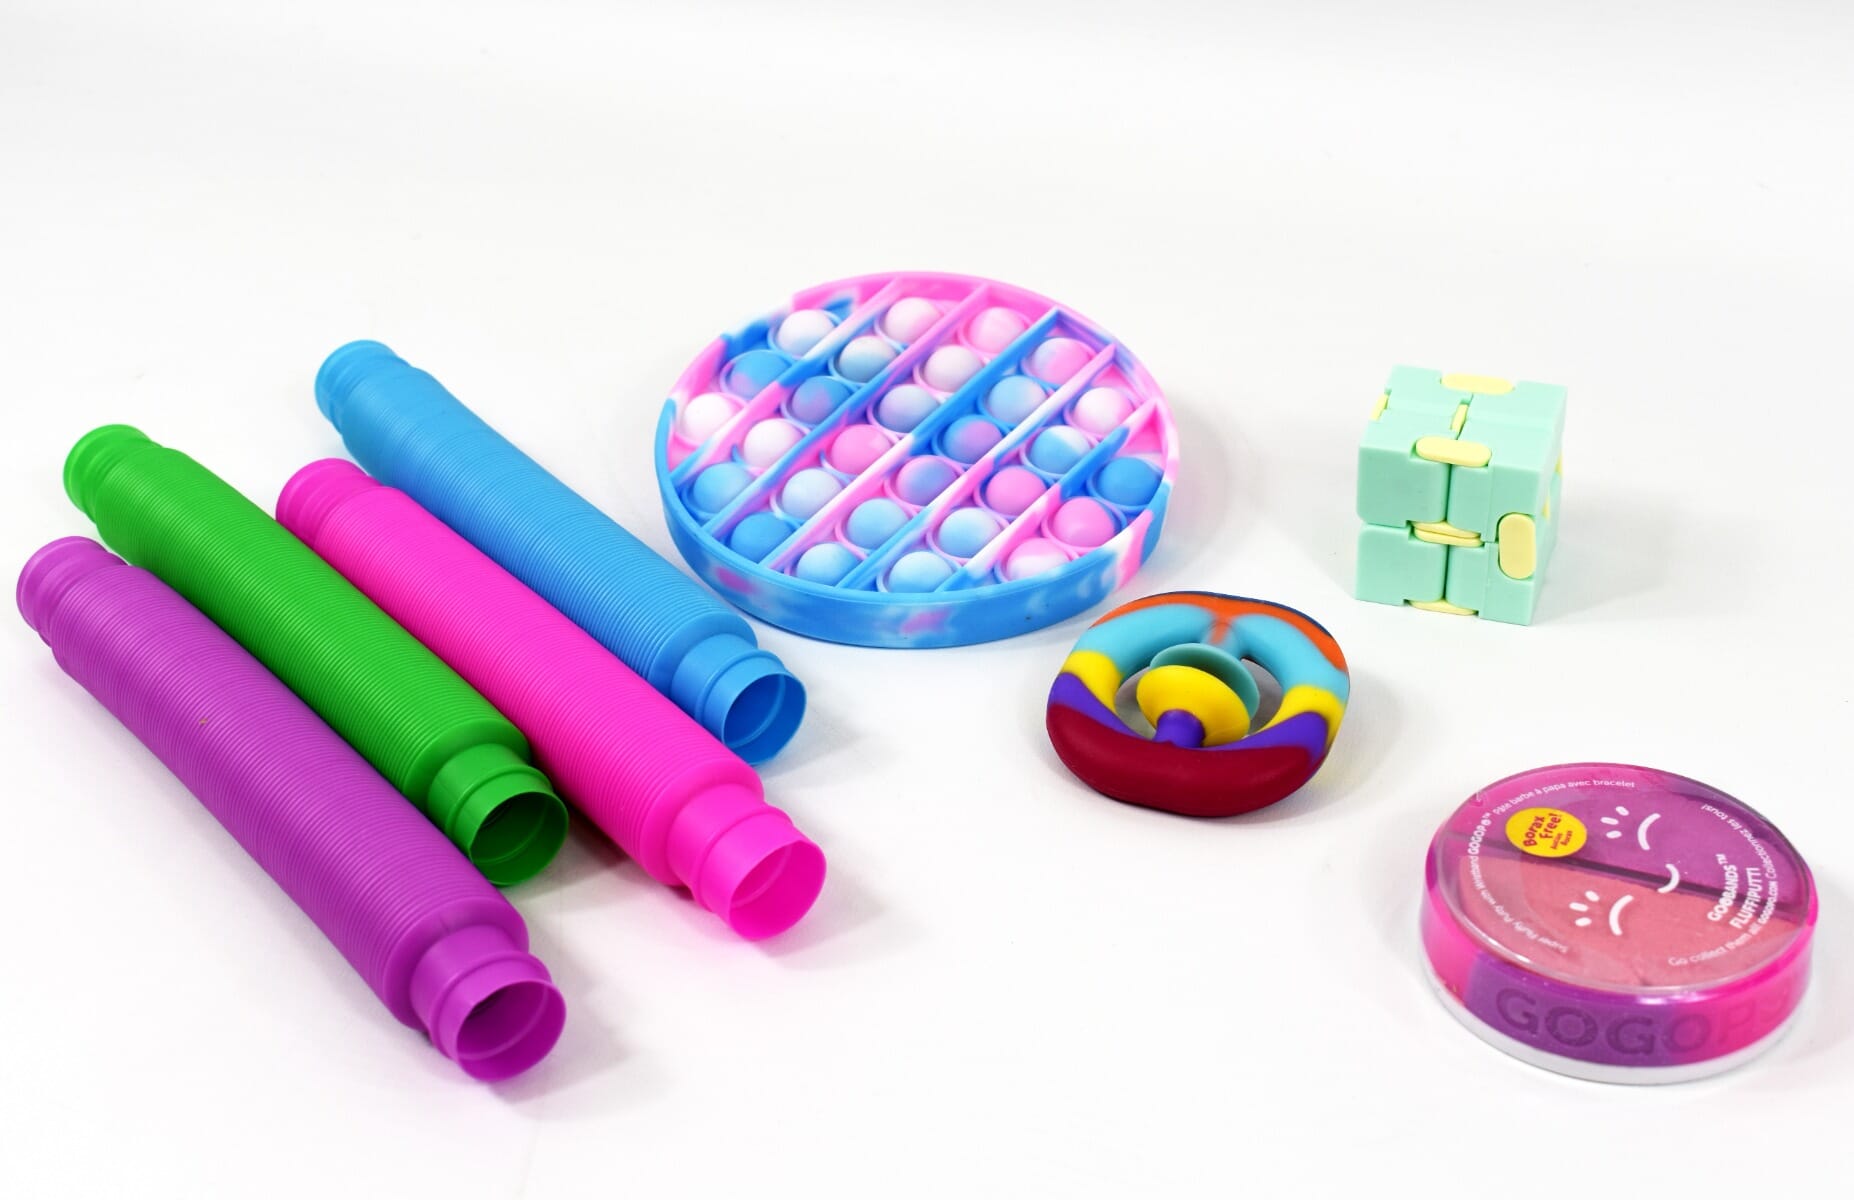 Caterpillar Fun Sensory Toy Fiddle Fidget Stress Sensory Autism ADHD Special CATERPILLAR 5056368088421 